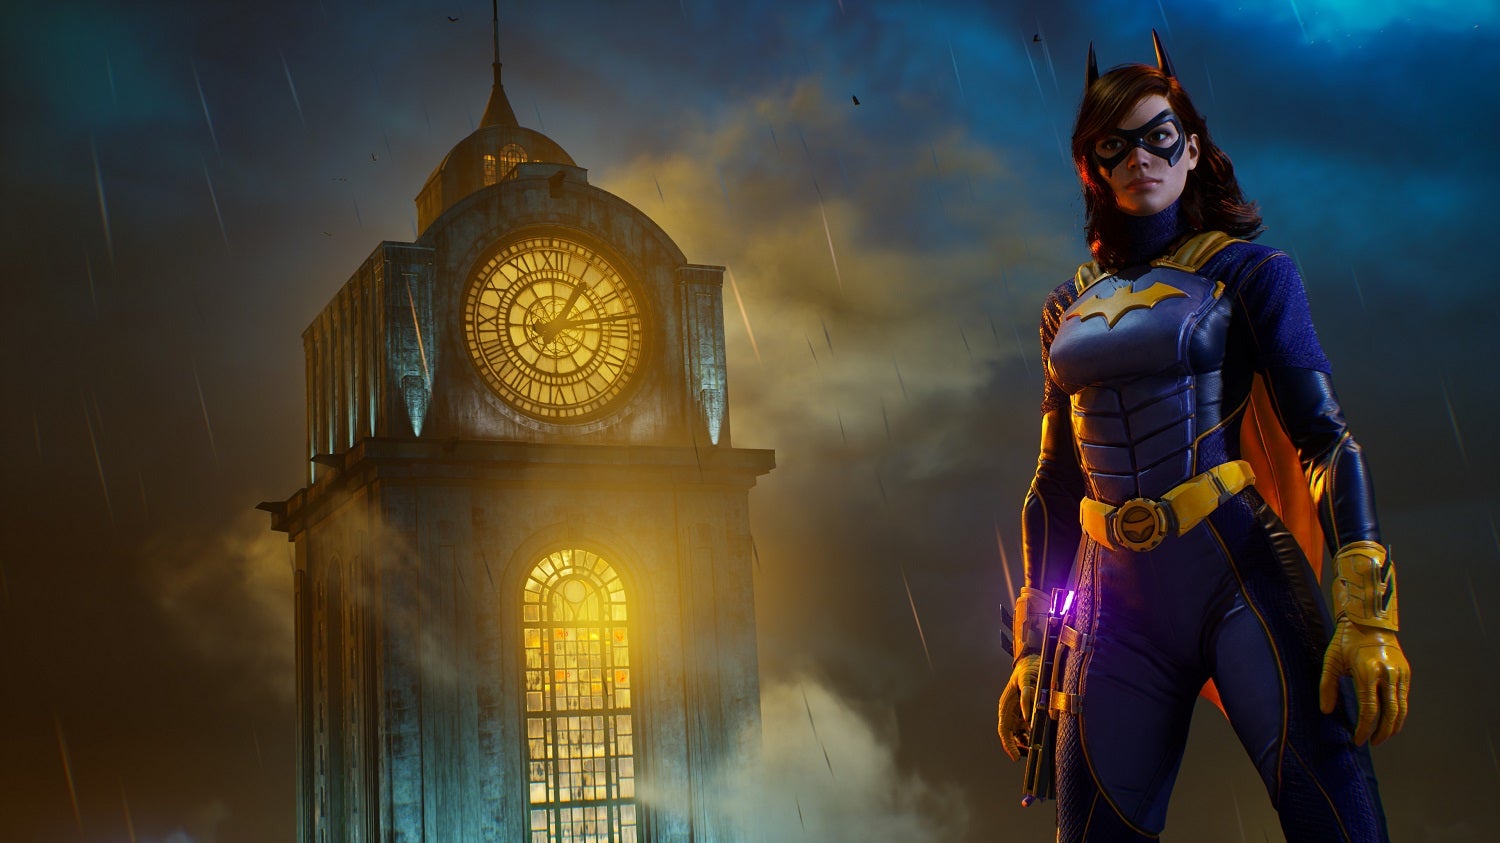 Obrazki dla Spory gameplay z Gotham Knights pokazuje Batgirl w akcji